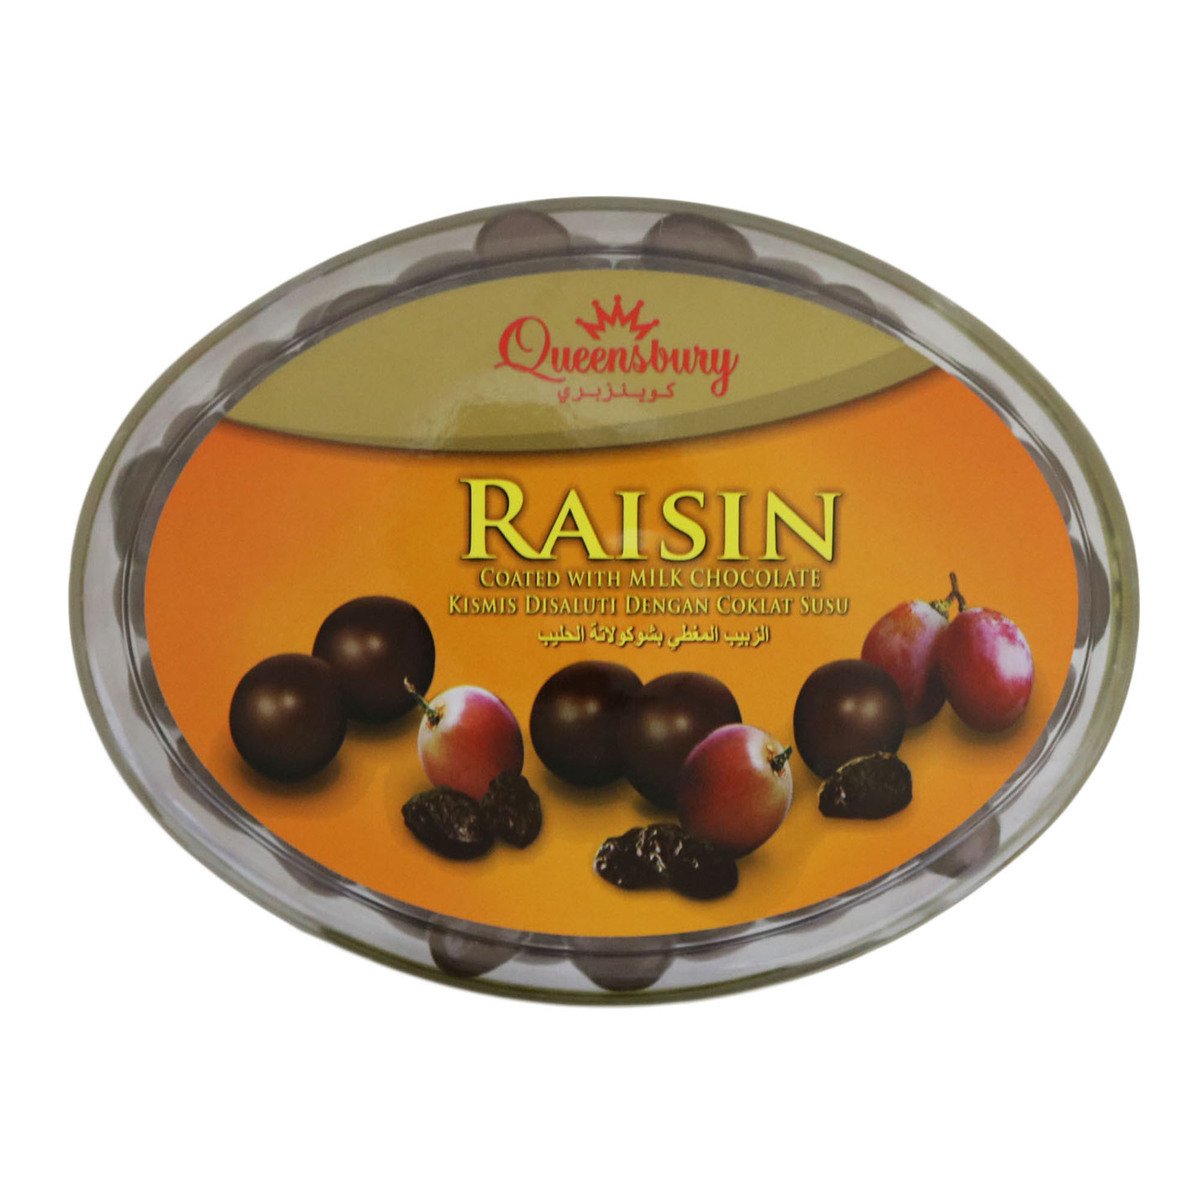 Queensbeery Milk Chocolate Raisins Oval 450g